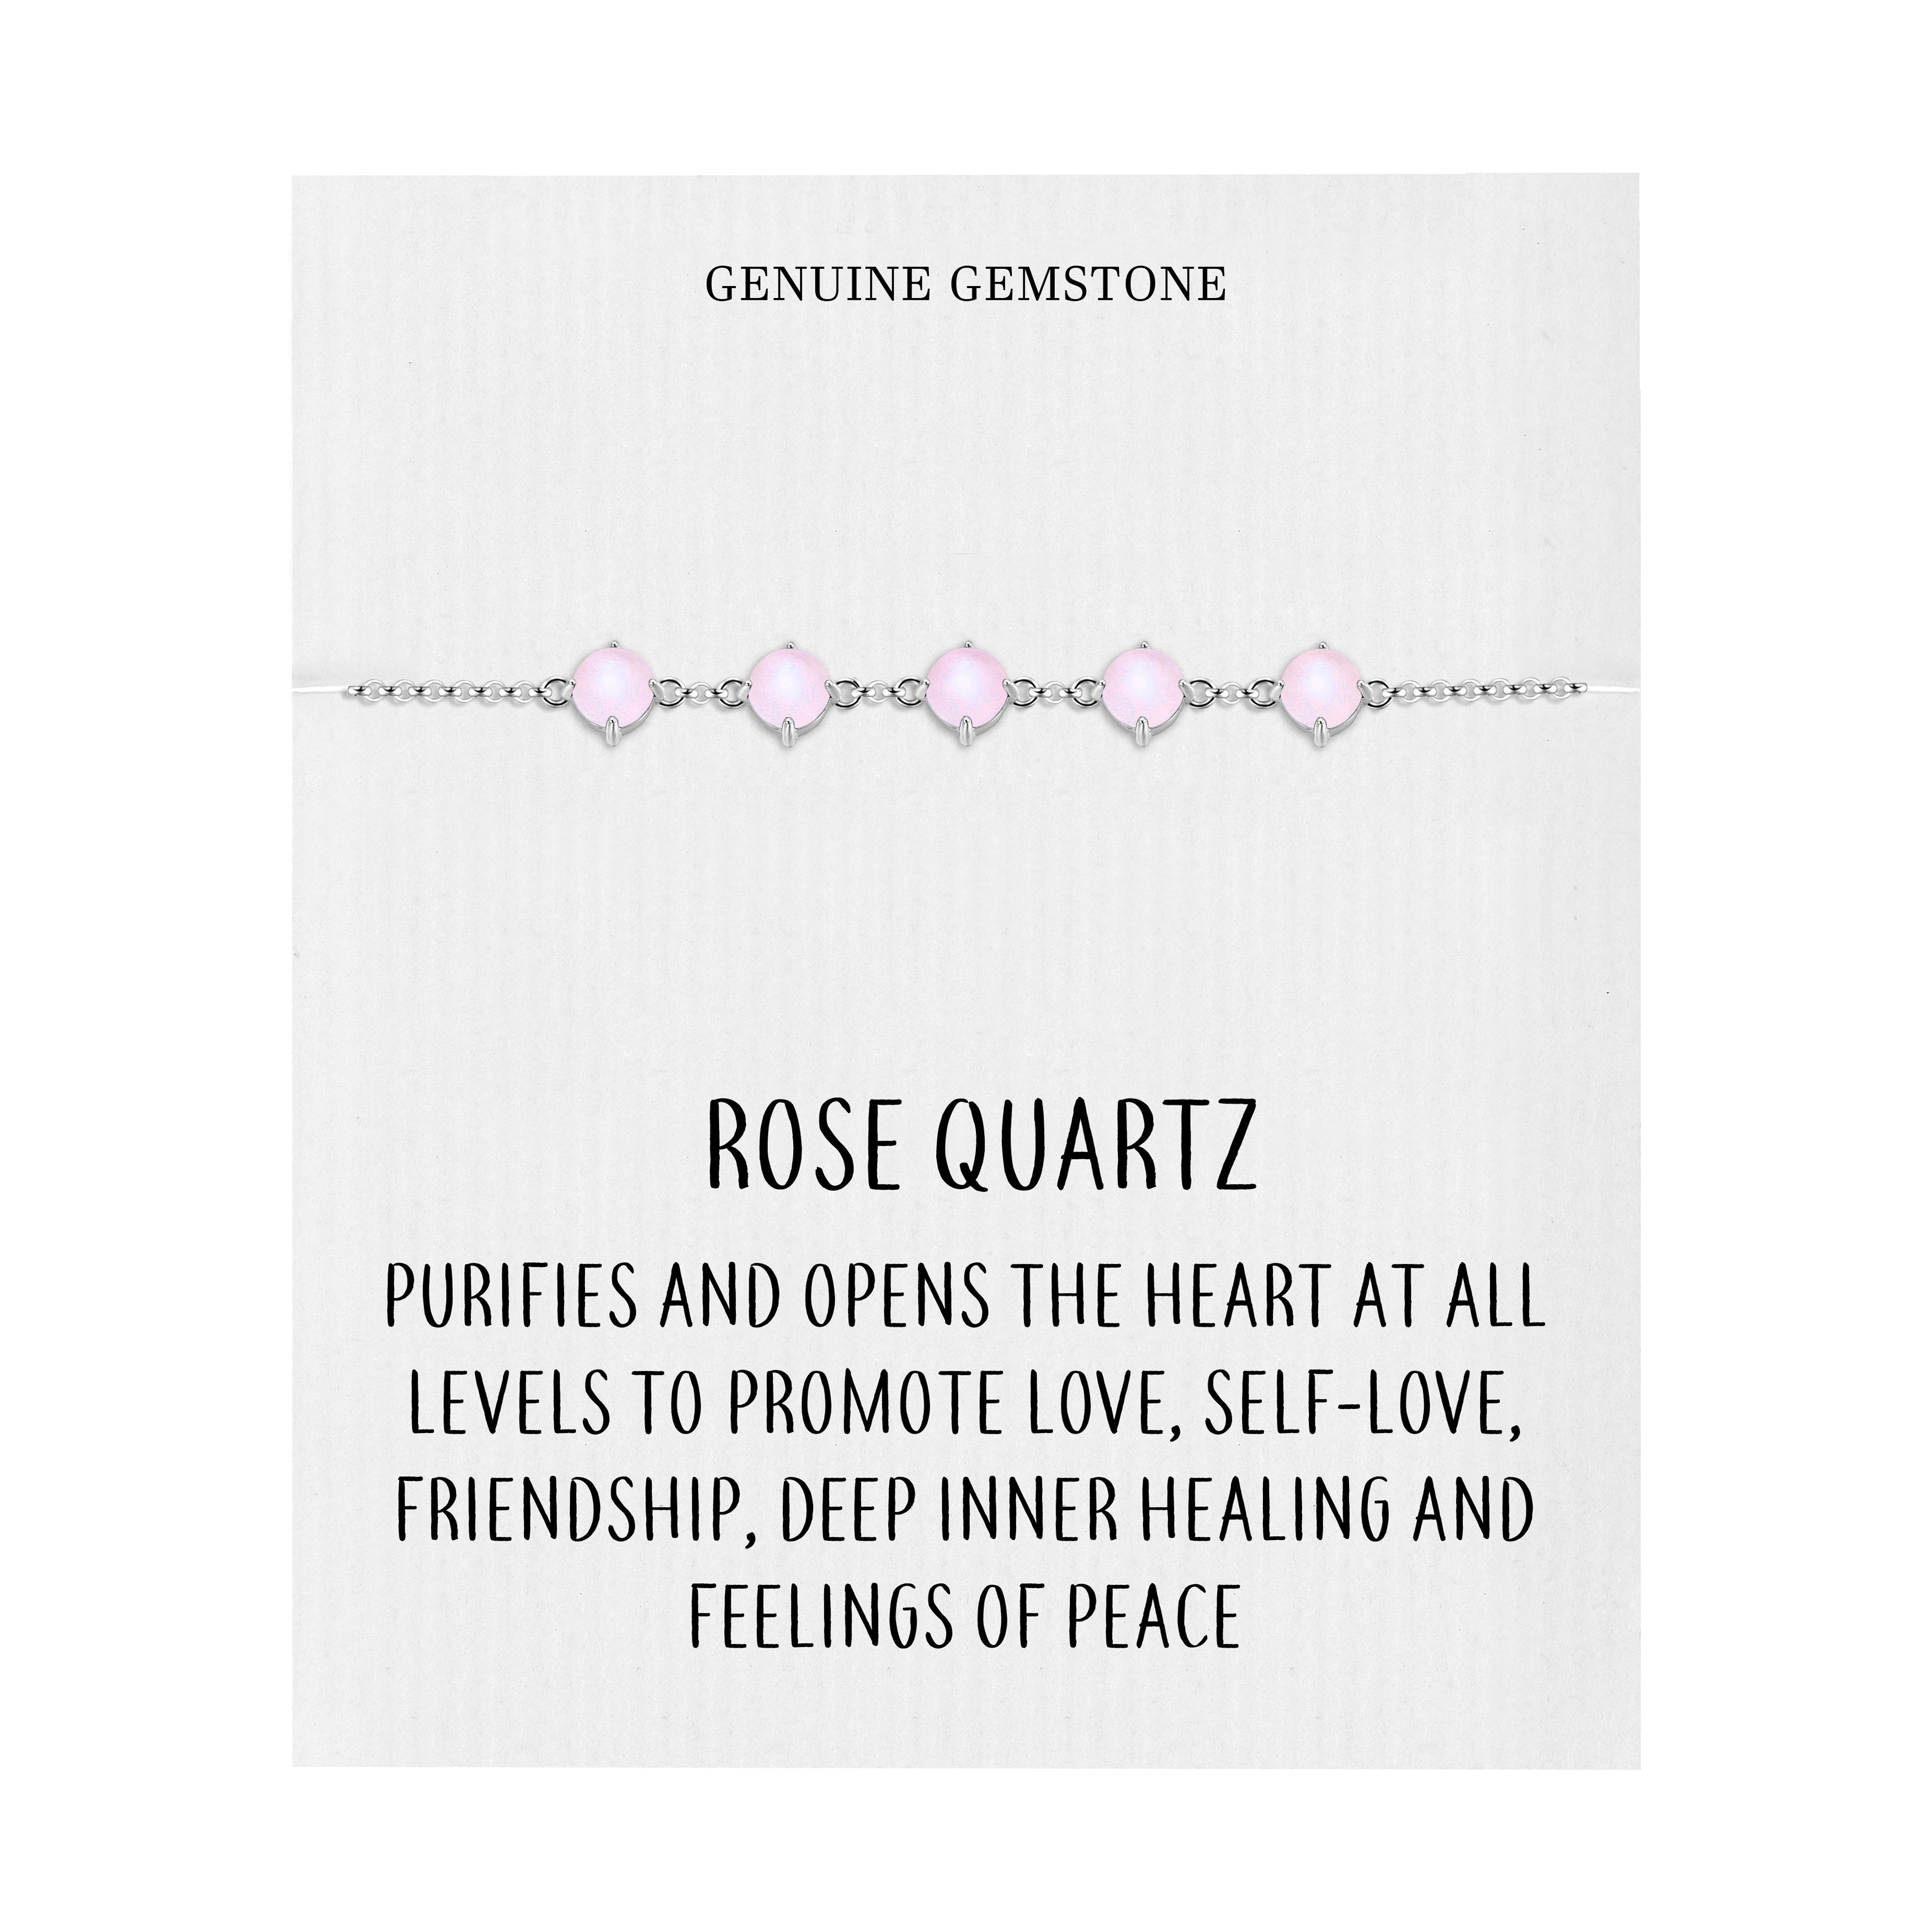 Rose Quartz Gemstone Bracelet with Quote Card by Philip Jones Jewellery